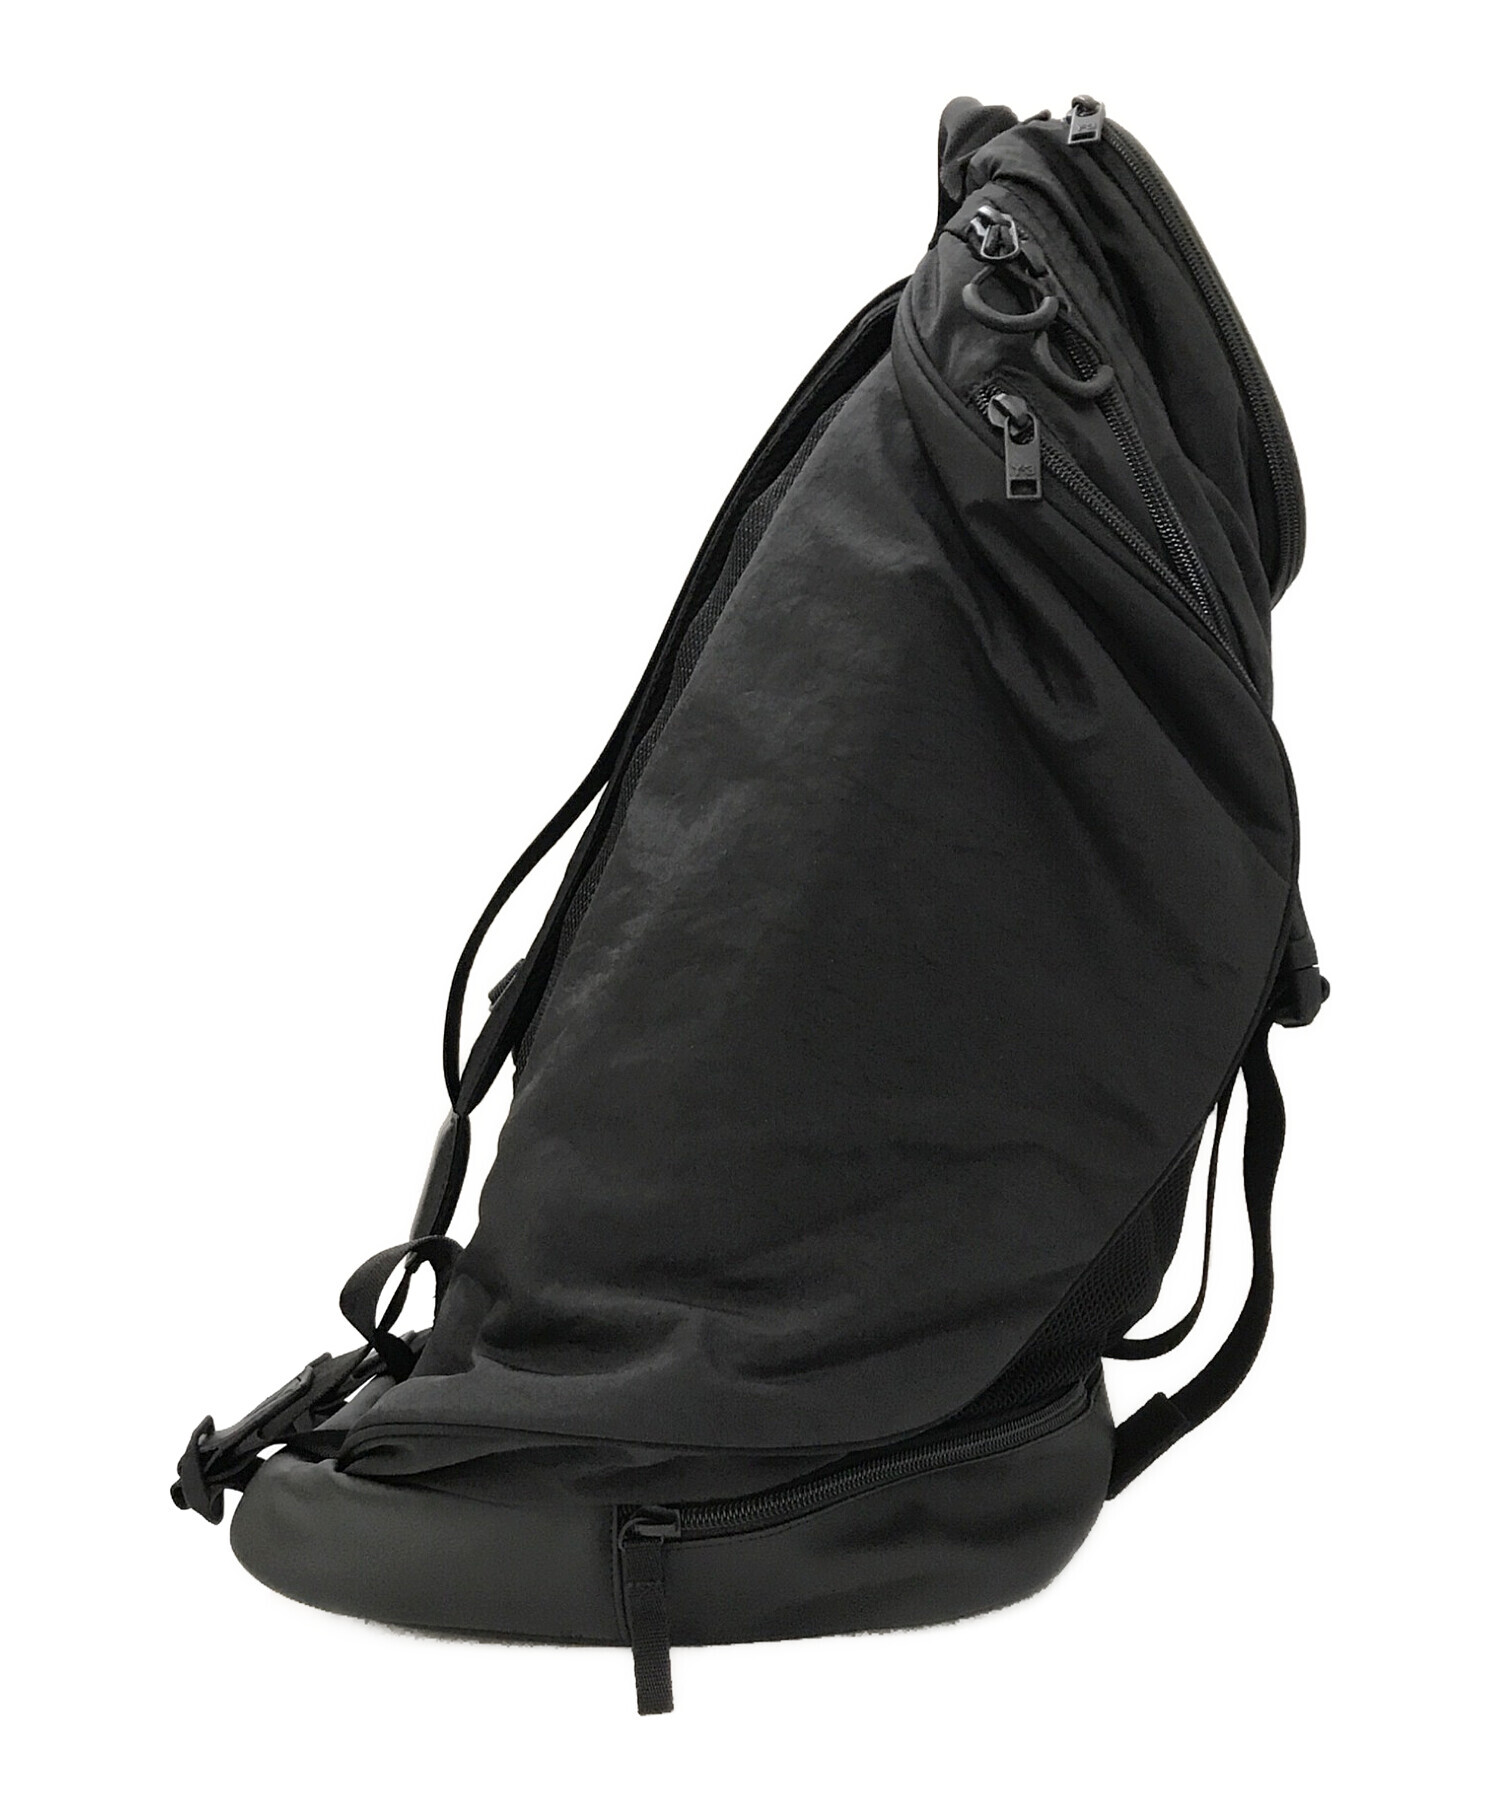 Y-3 (ワイスリー) Travel backpack ブラック